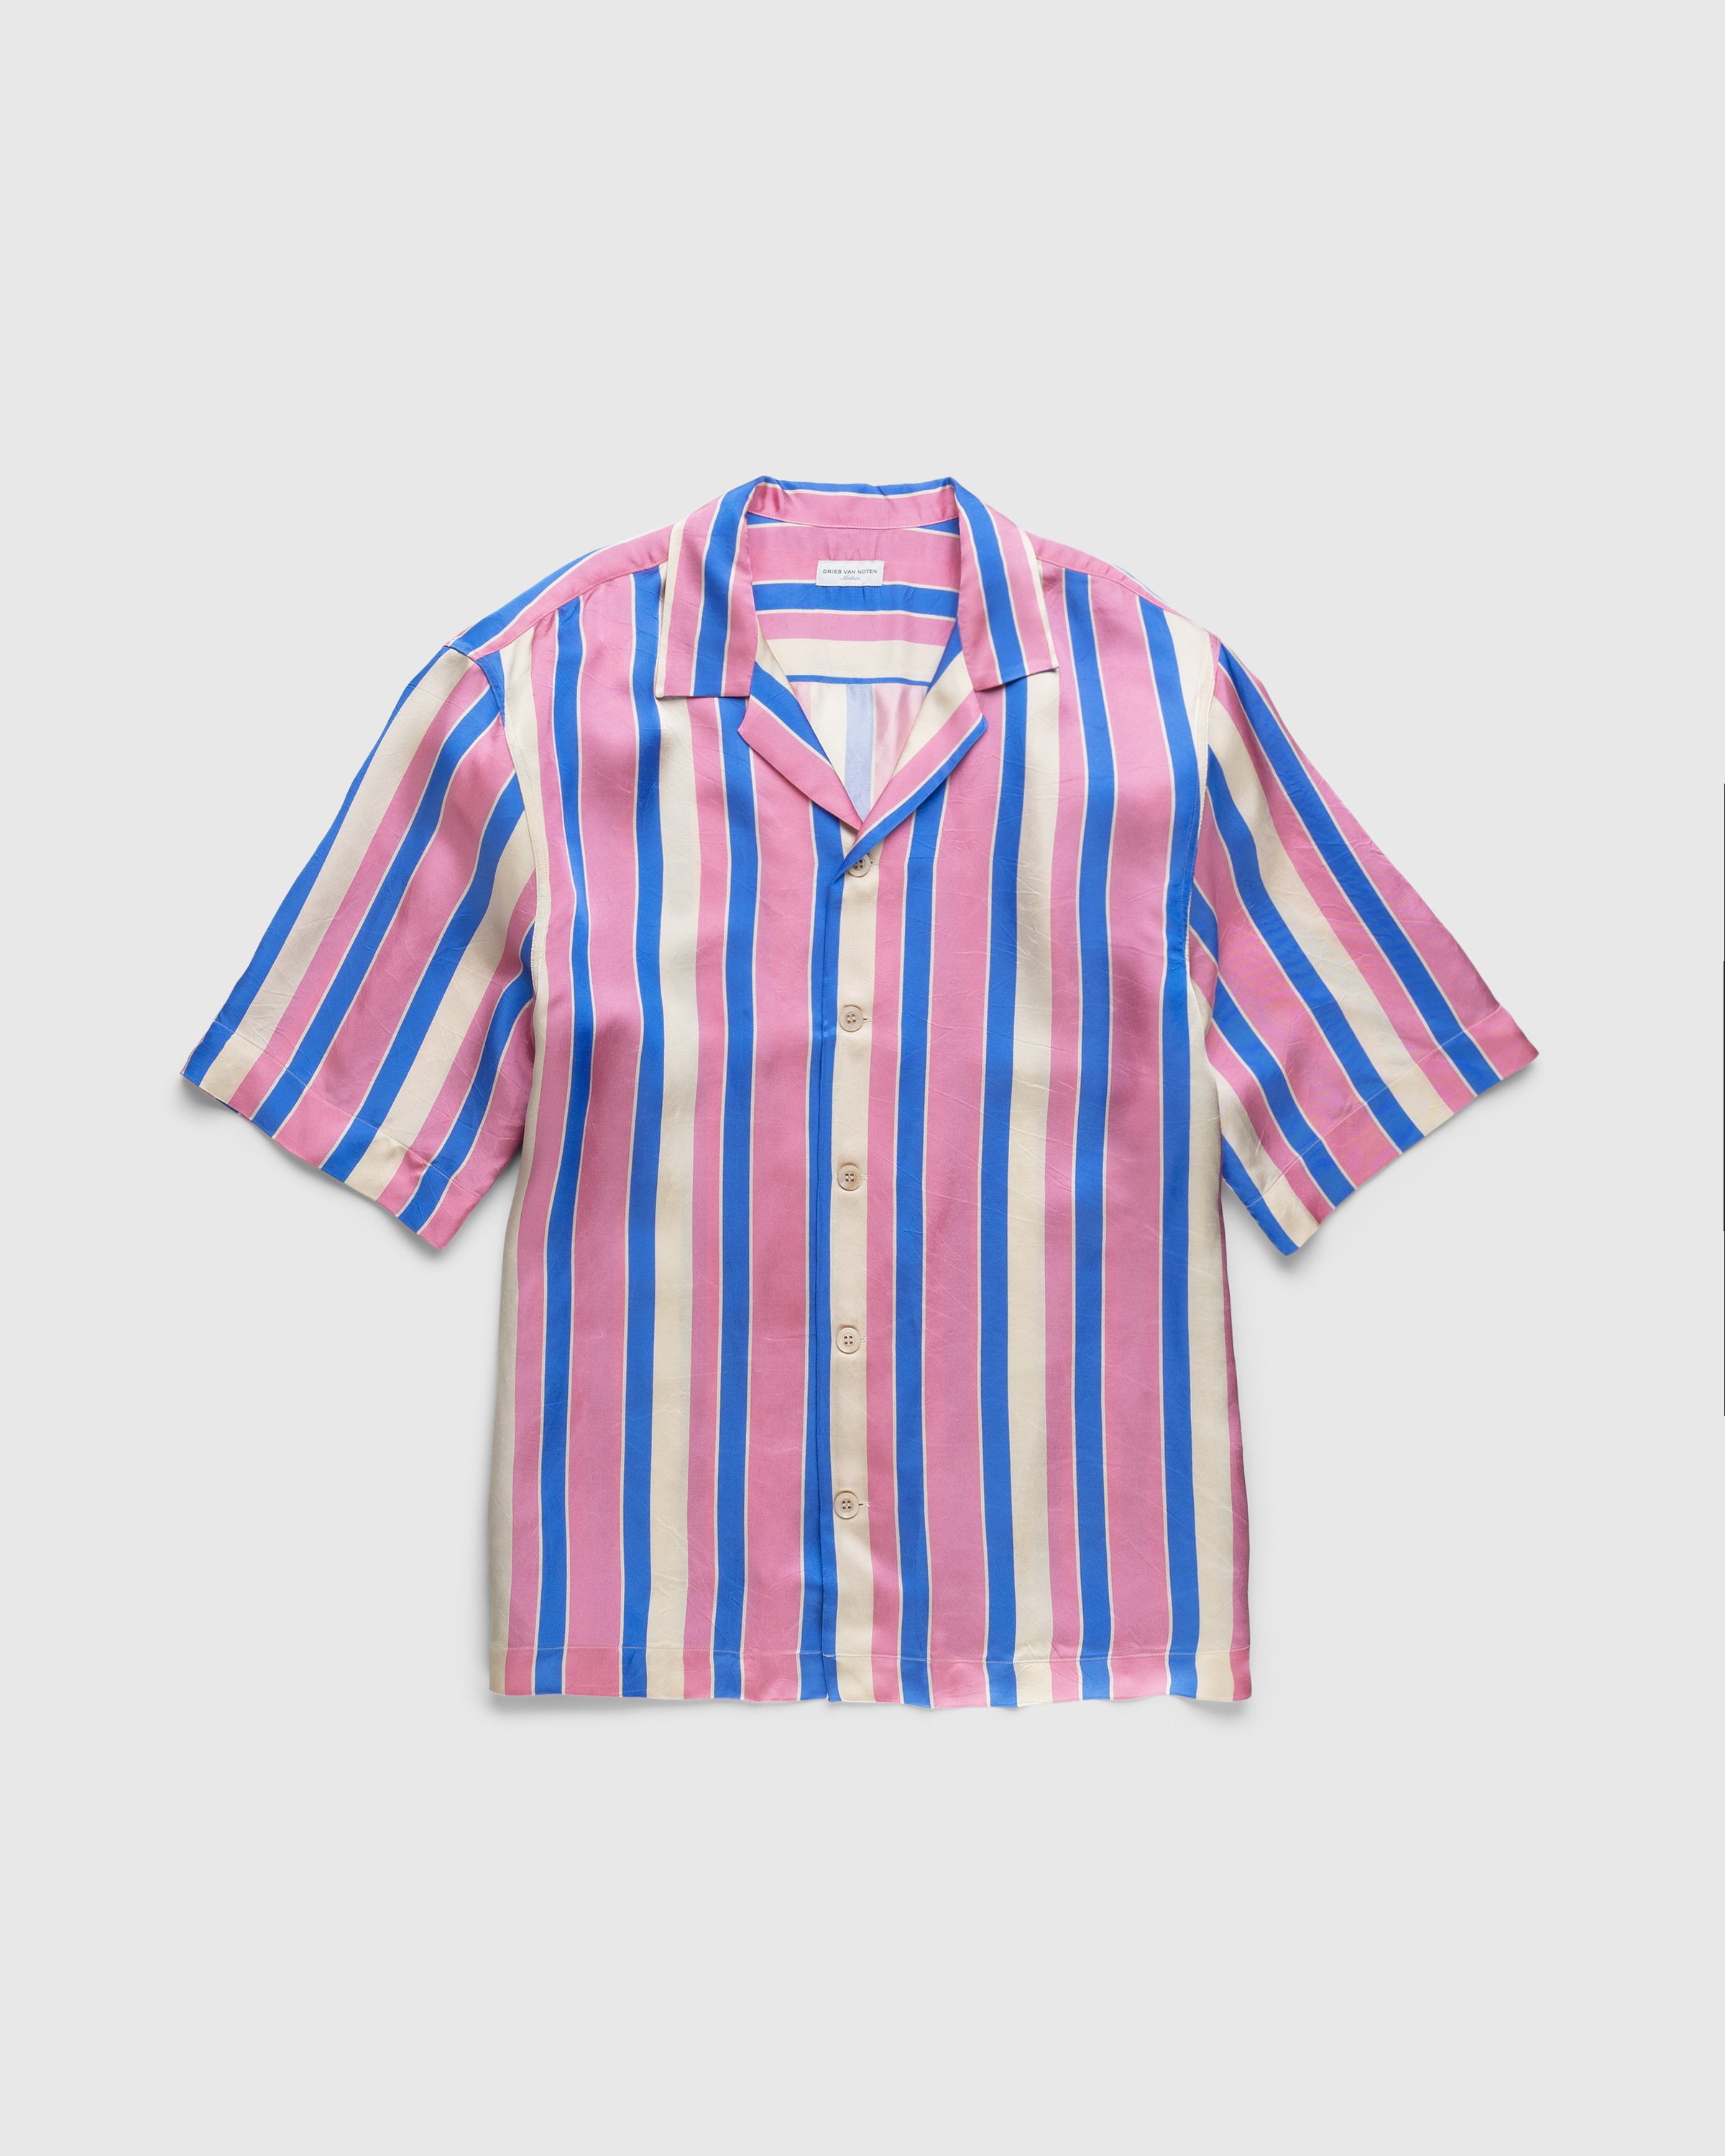 Dries van Noten - Cassi Shirt Pink - Clothing - Pink - Image 1